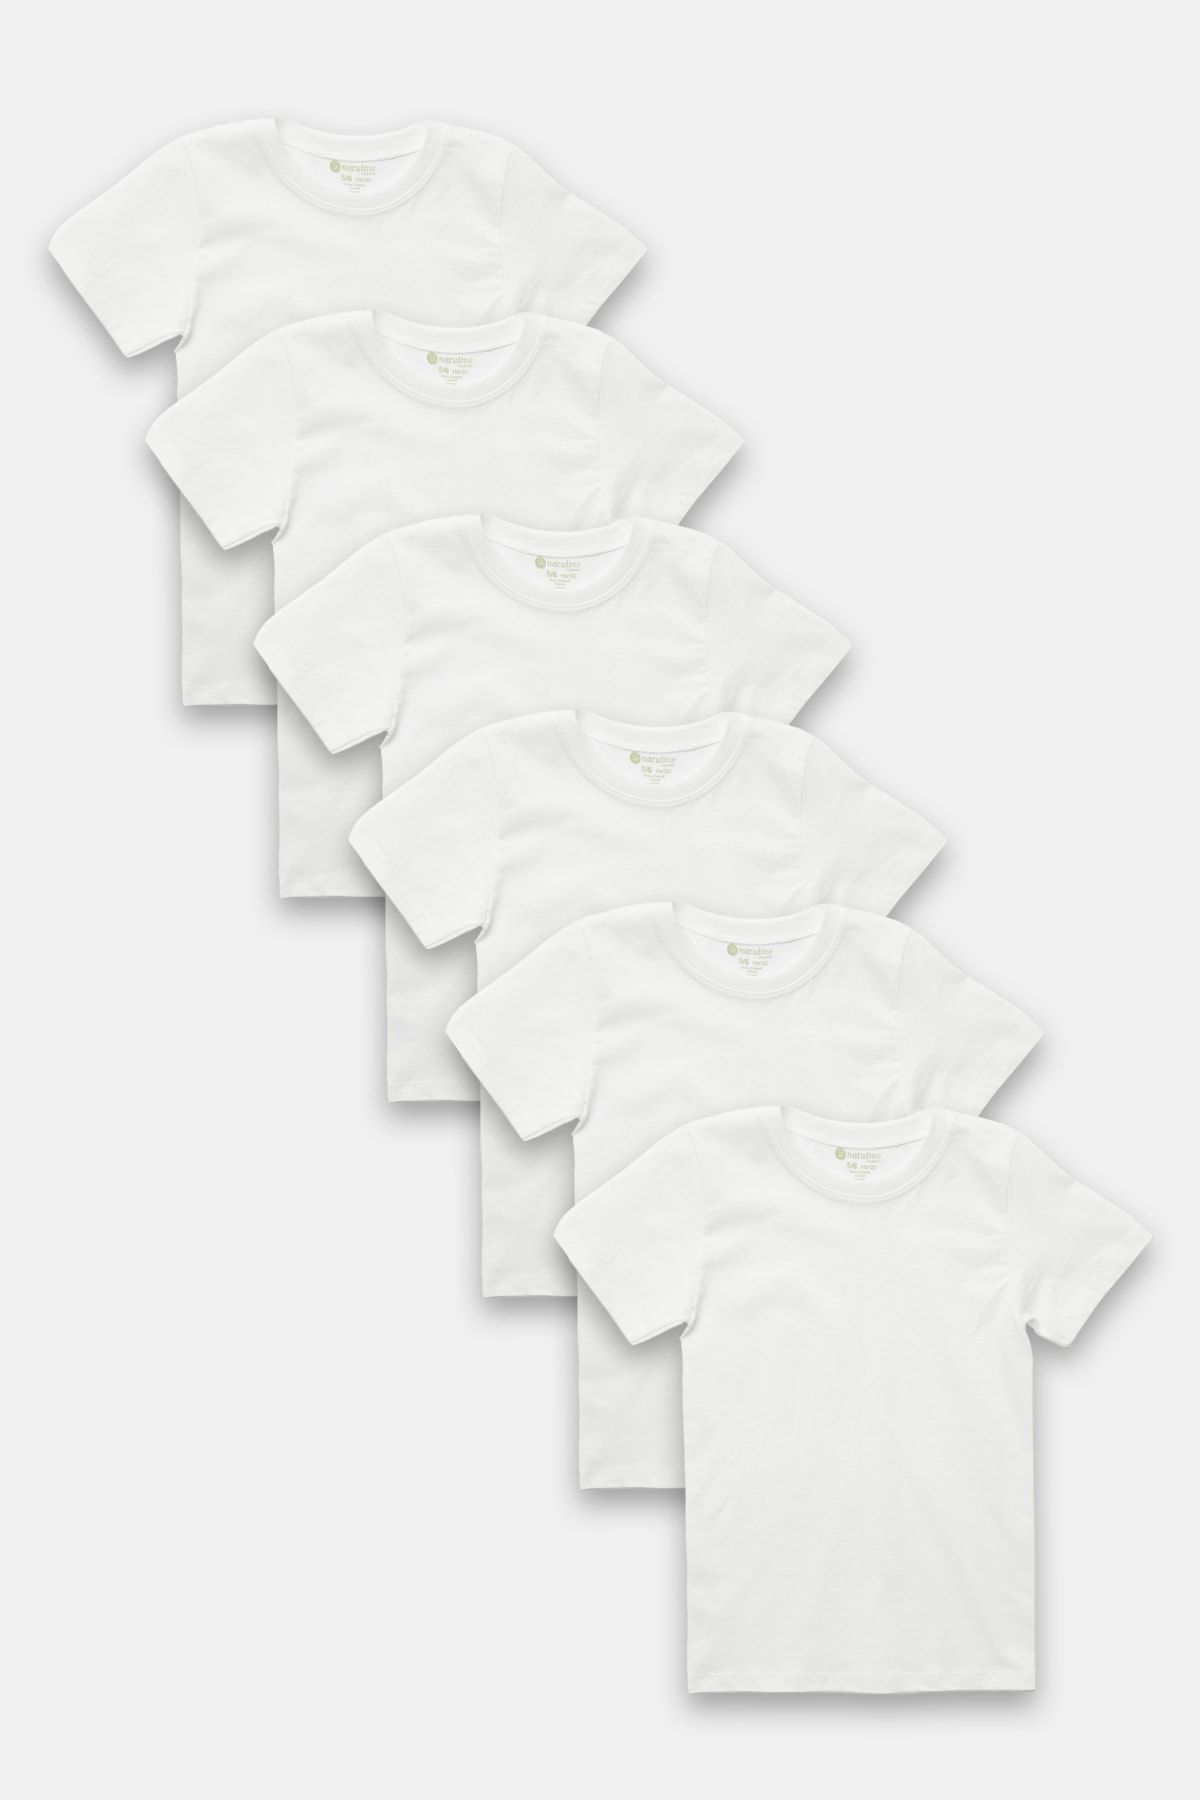 natuline Erkek Çocuk Organik Pamuk Penye 6'lı Paket T-shirt